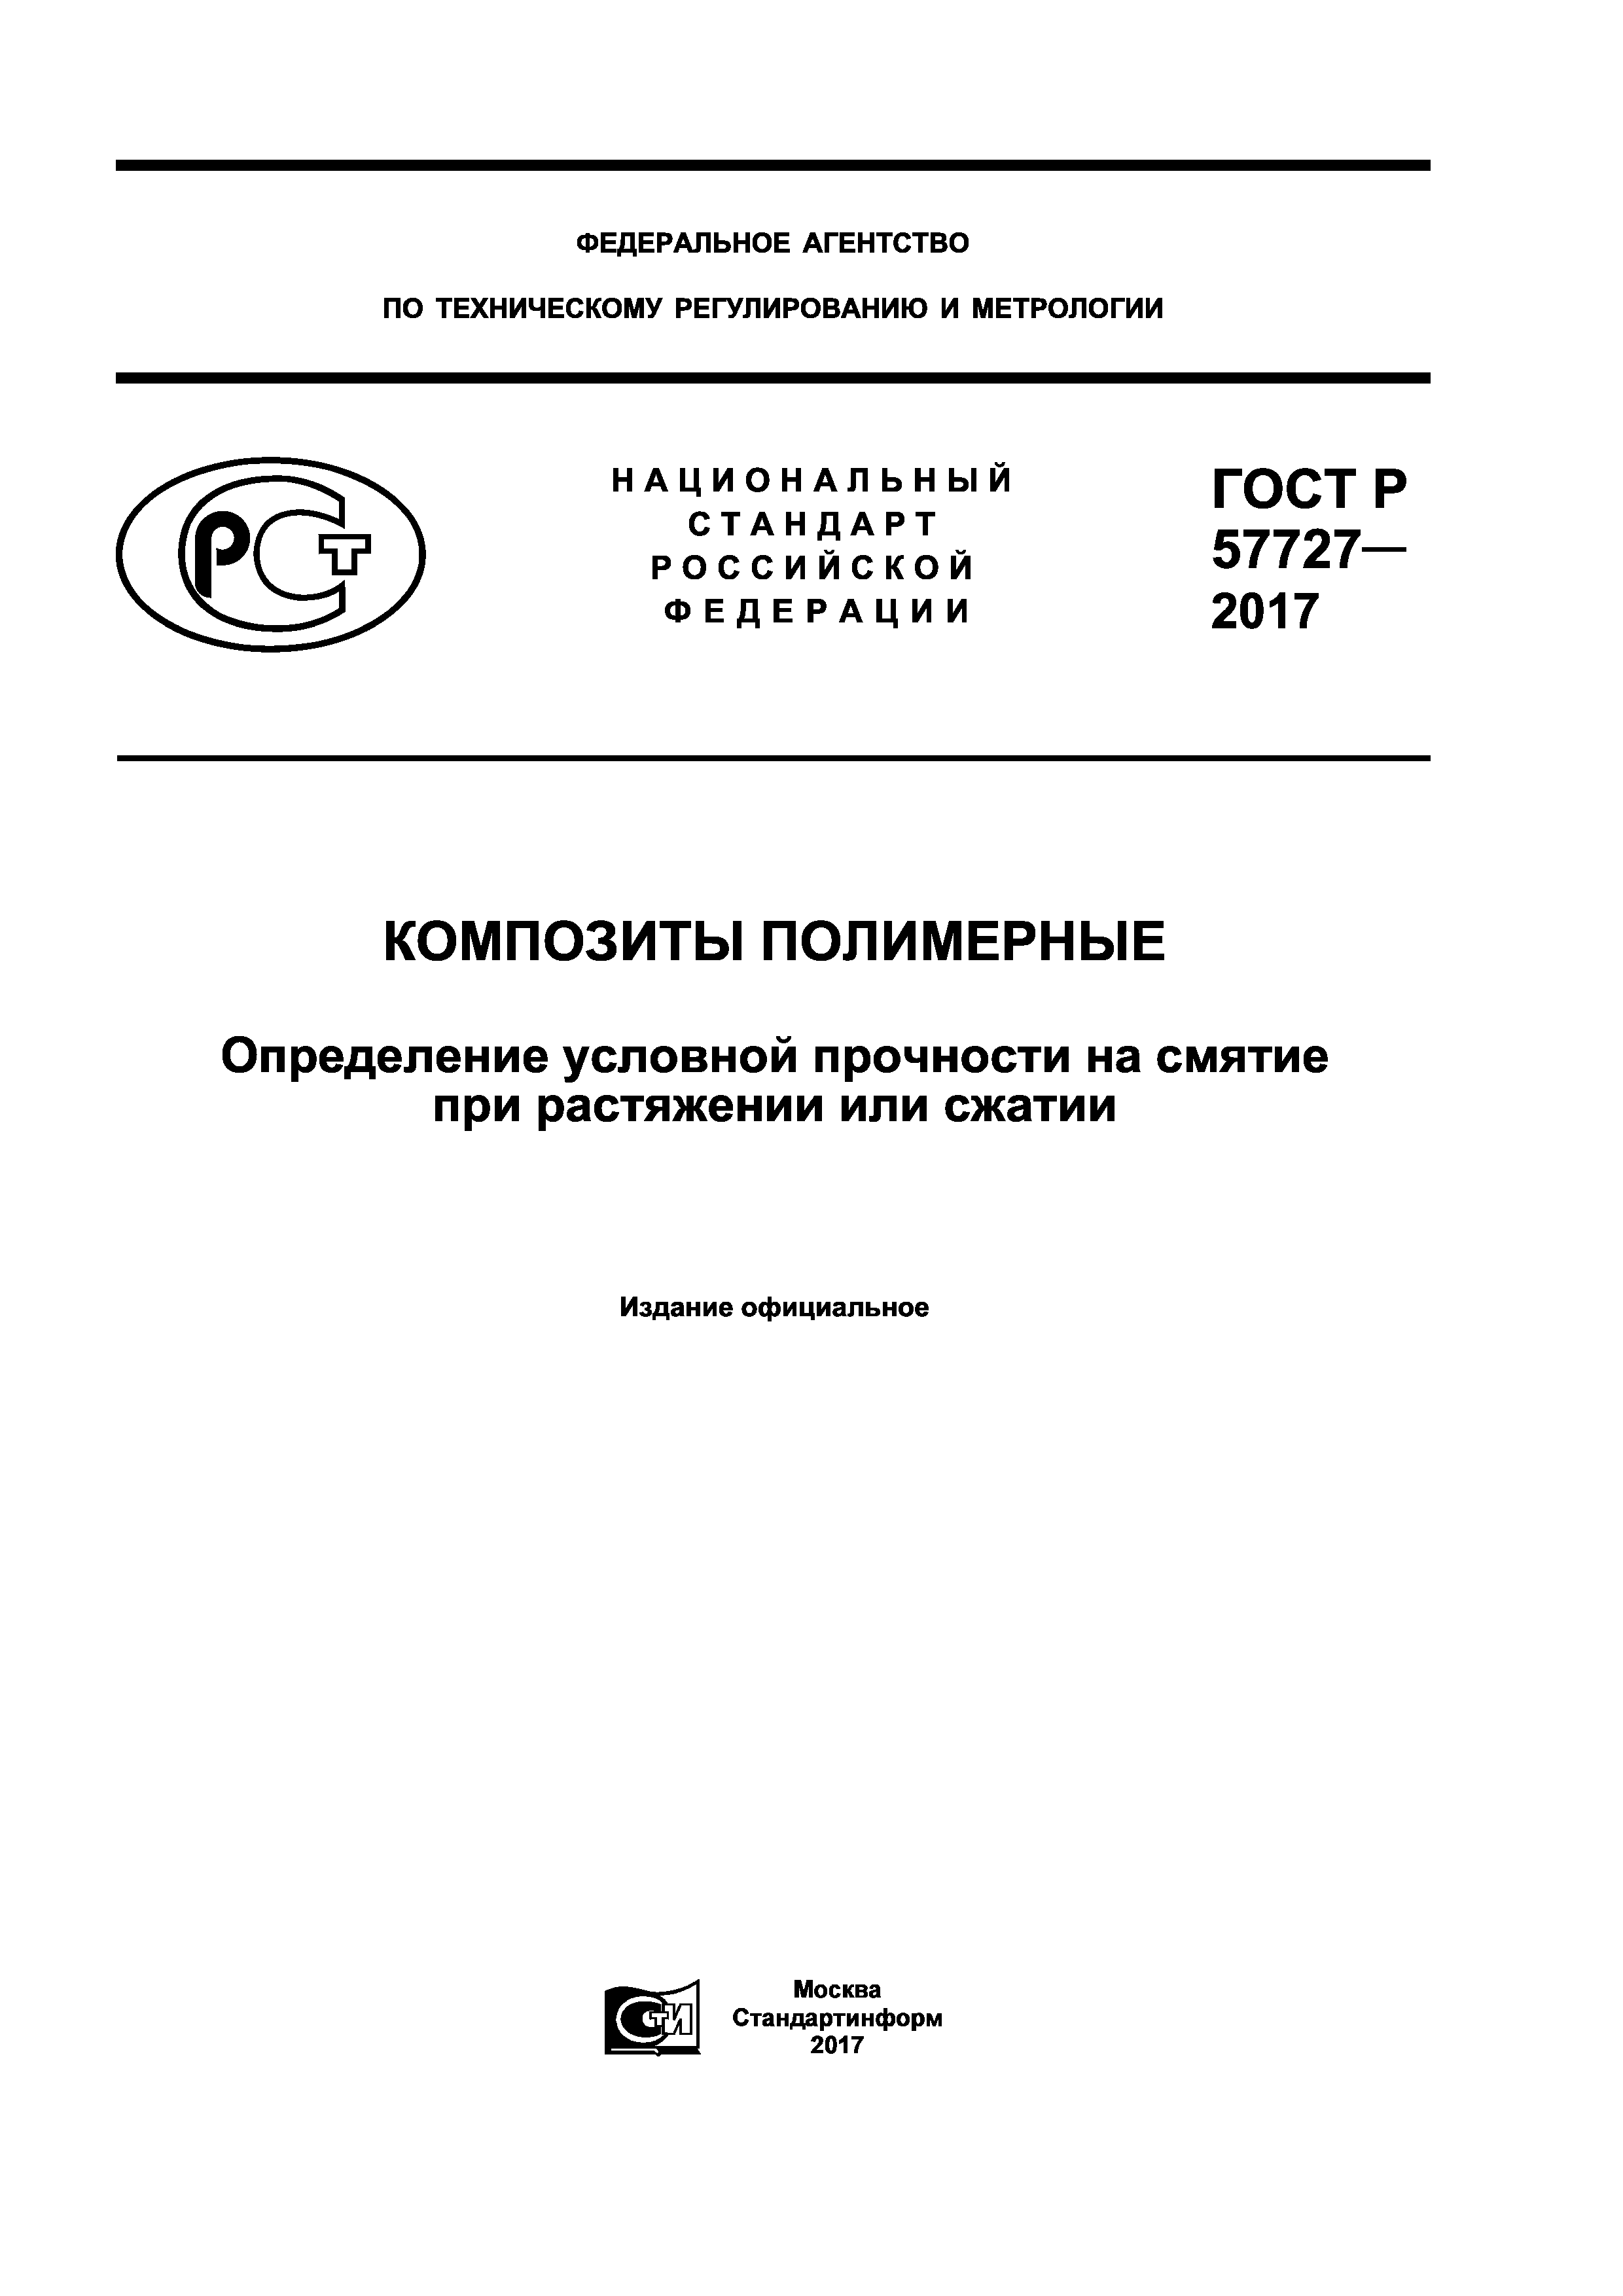 ГОСТ Р 57727-2017